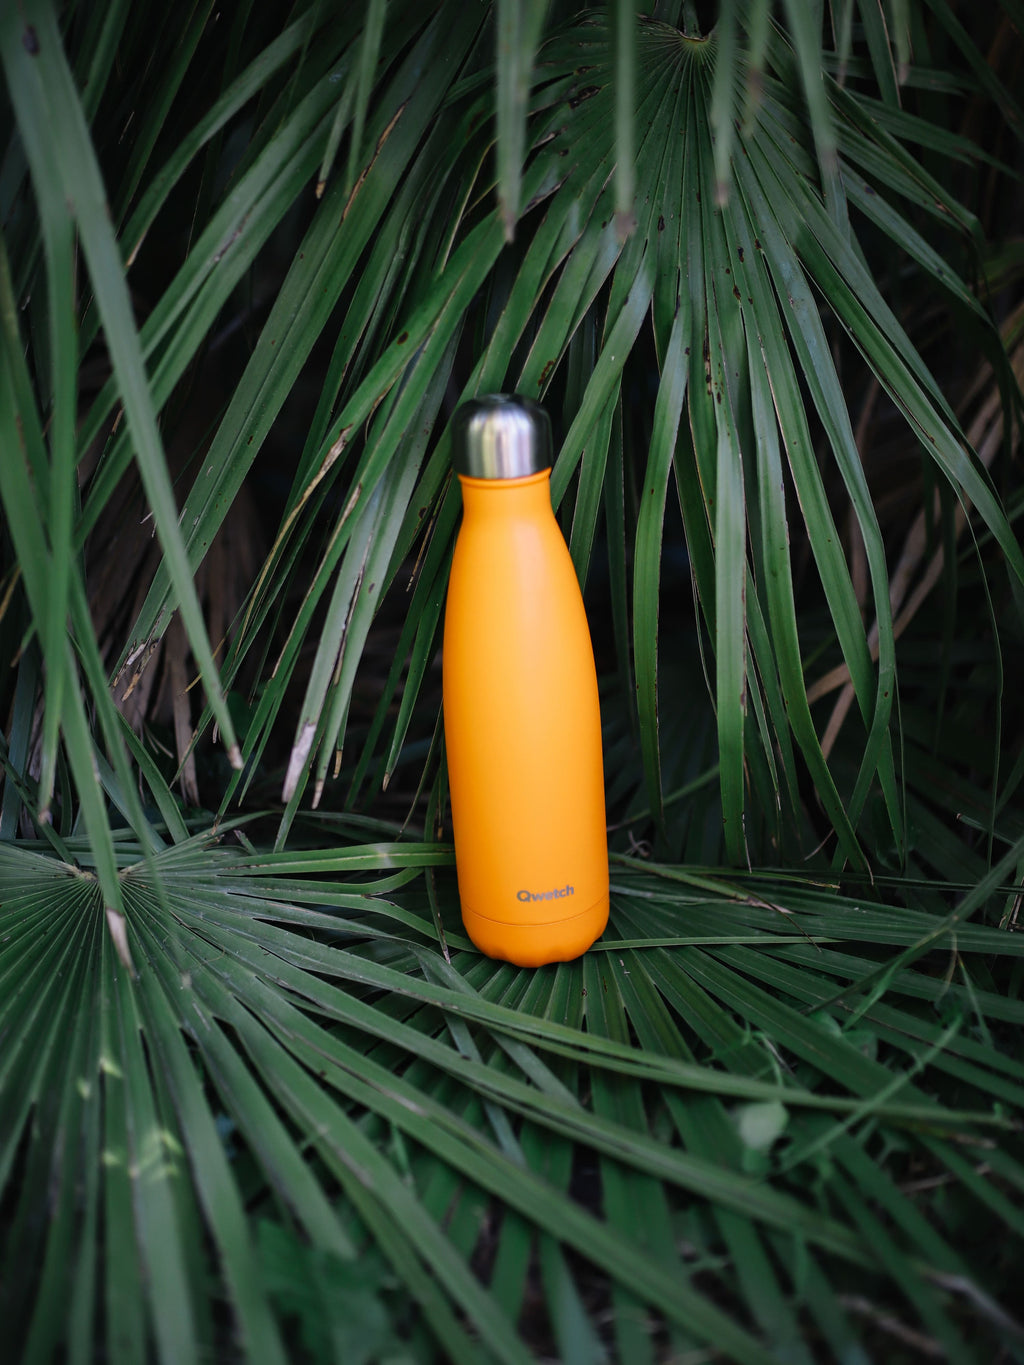 Insulated Bottle - Originals Pop Orange